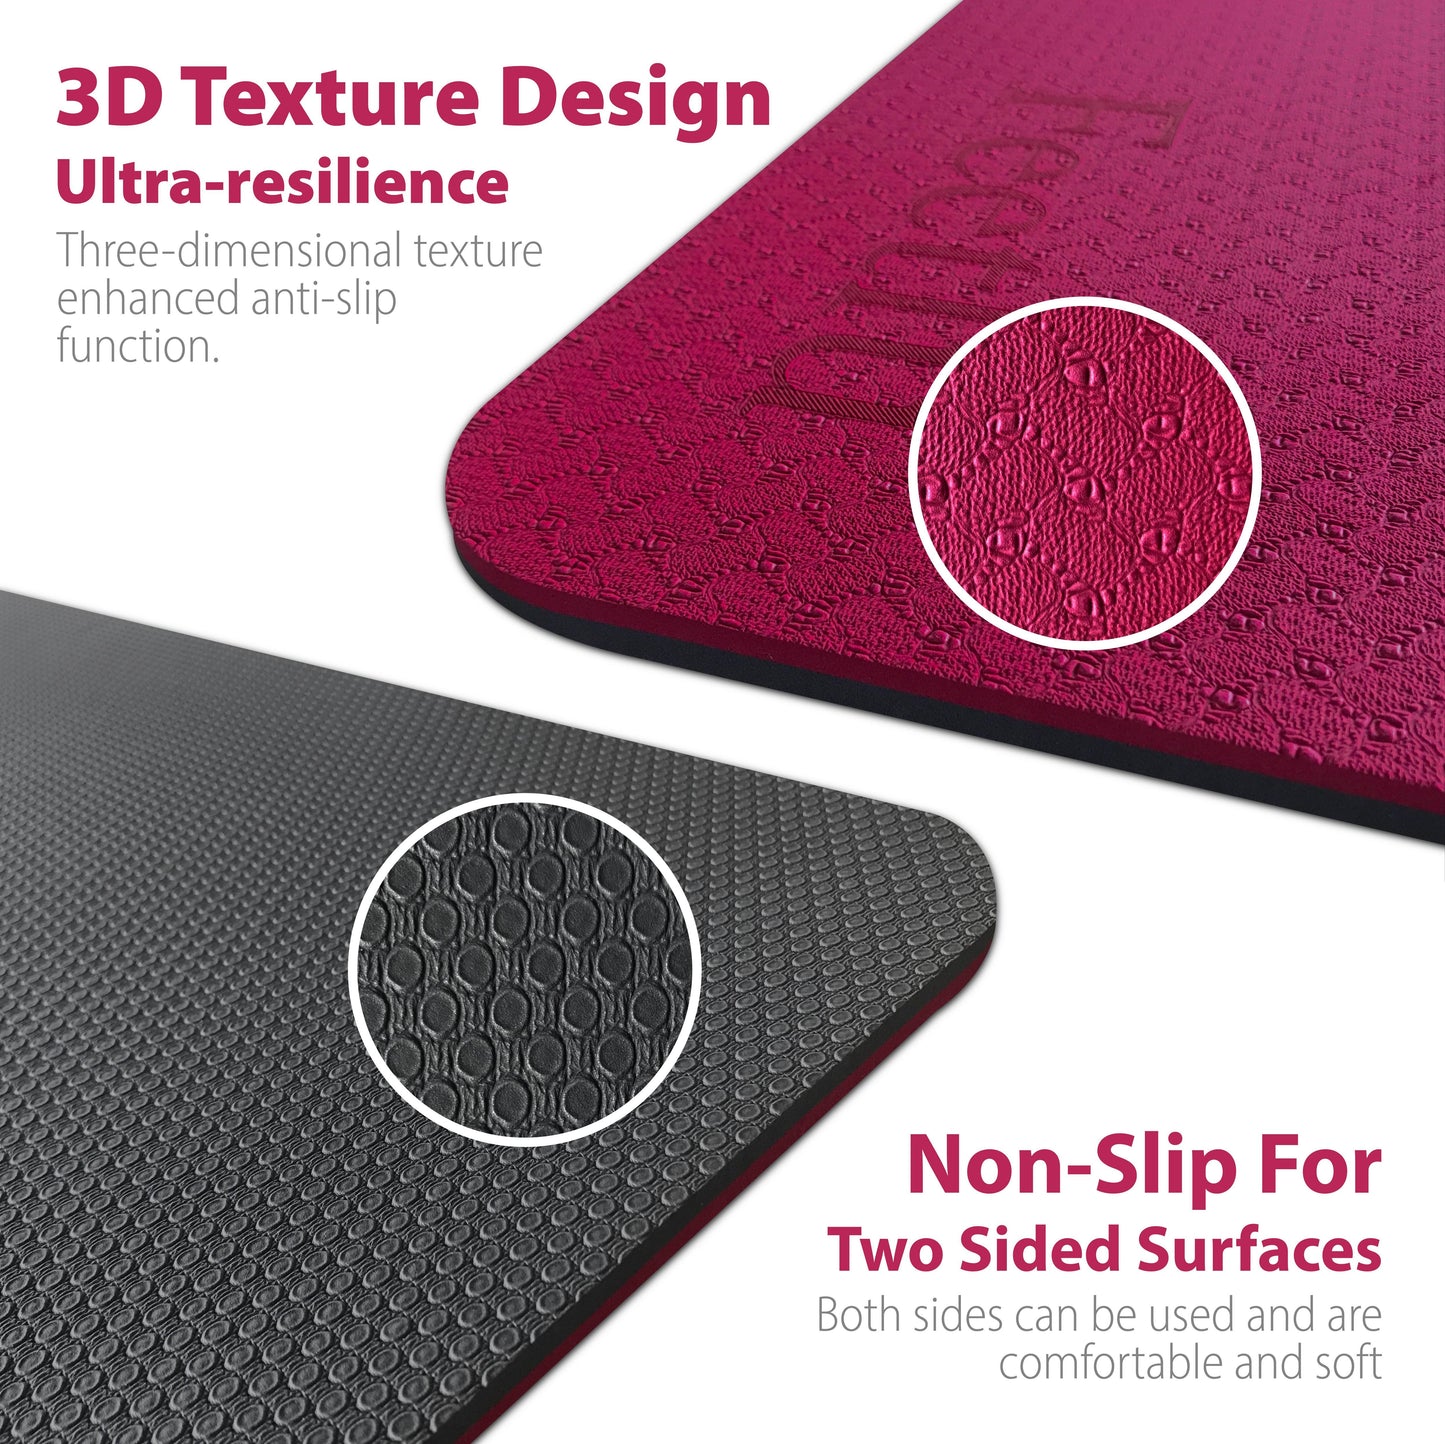 Thick Yoga Mat 10mm (2/5")-Pink/Gray